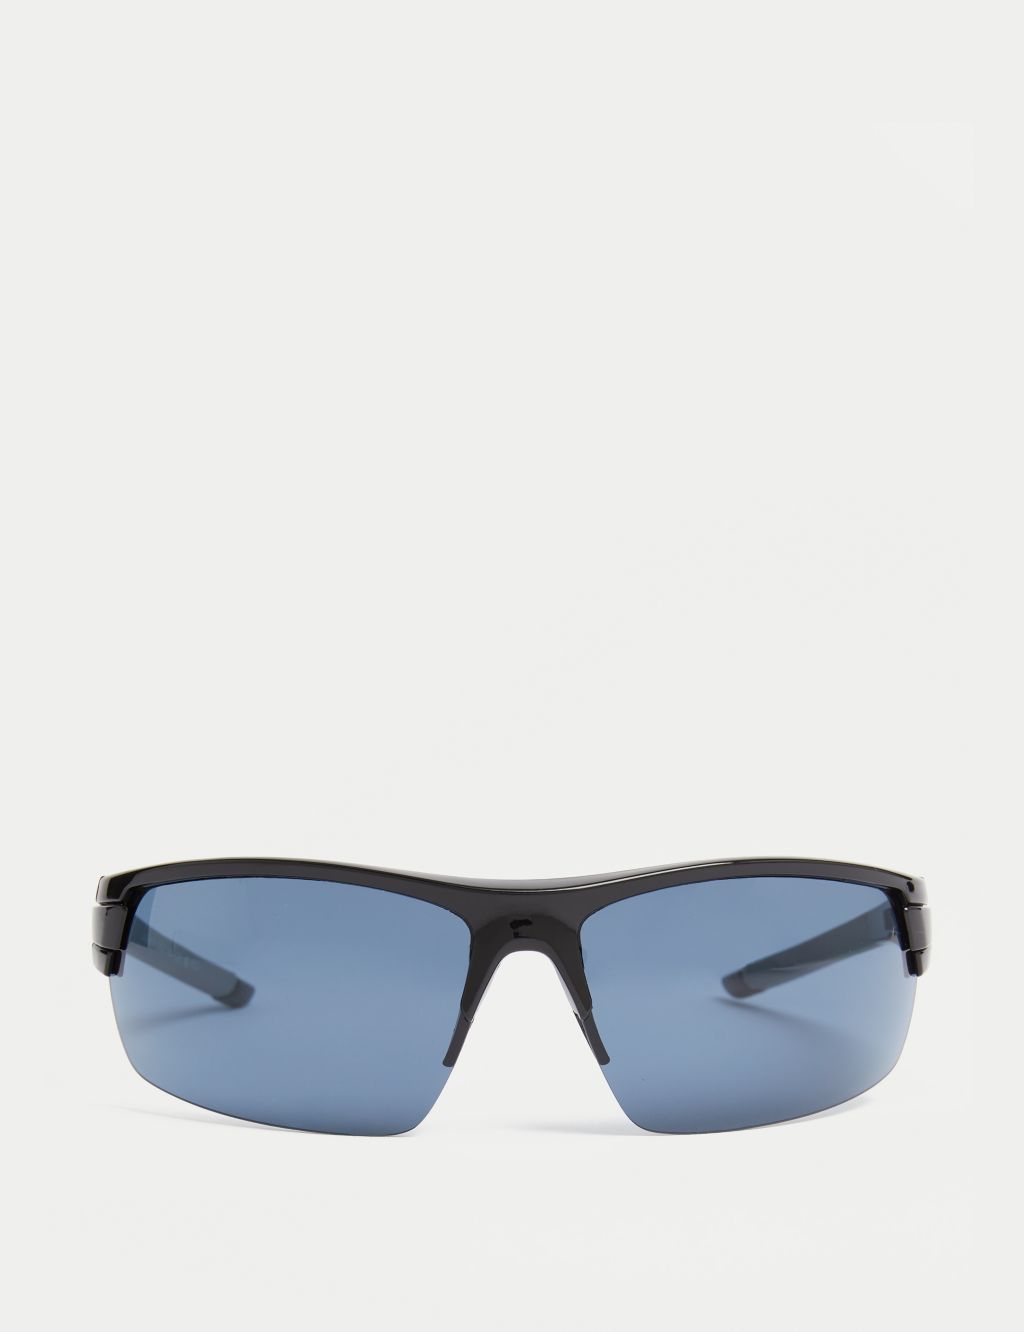 M&S Mens Sport Sunglasses - Black